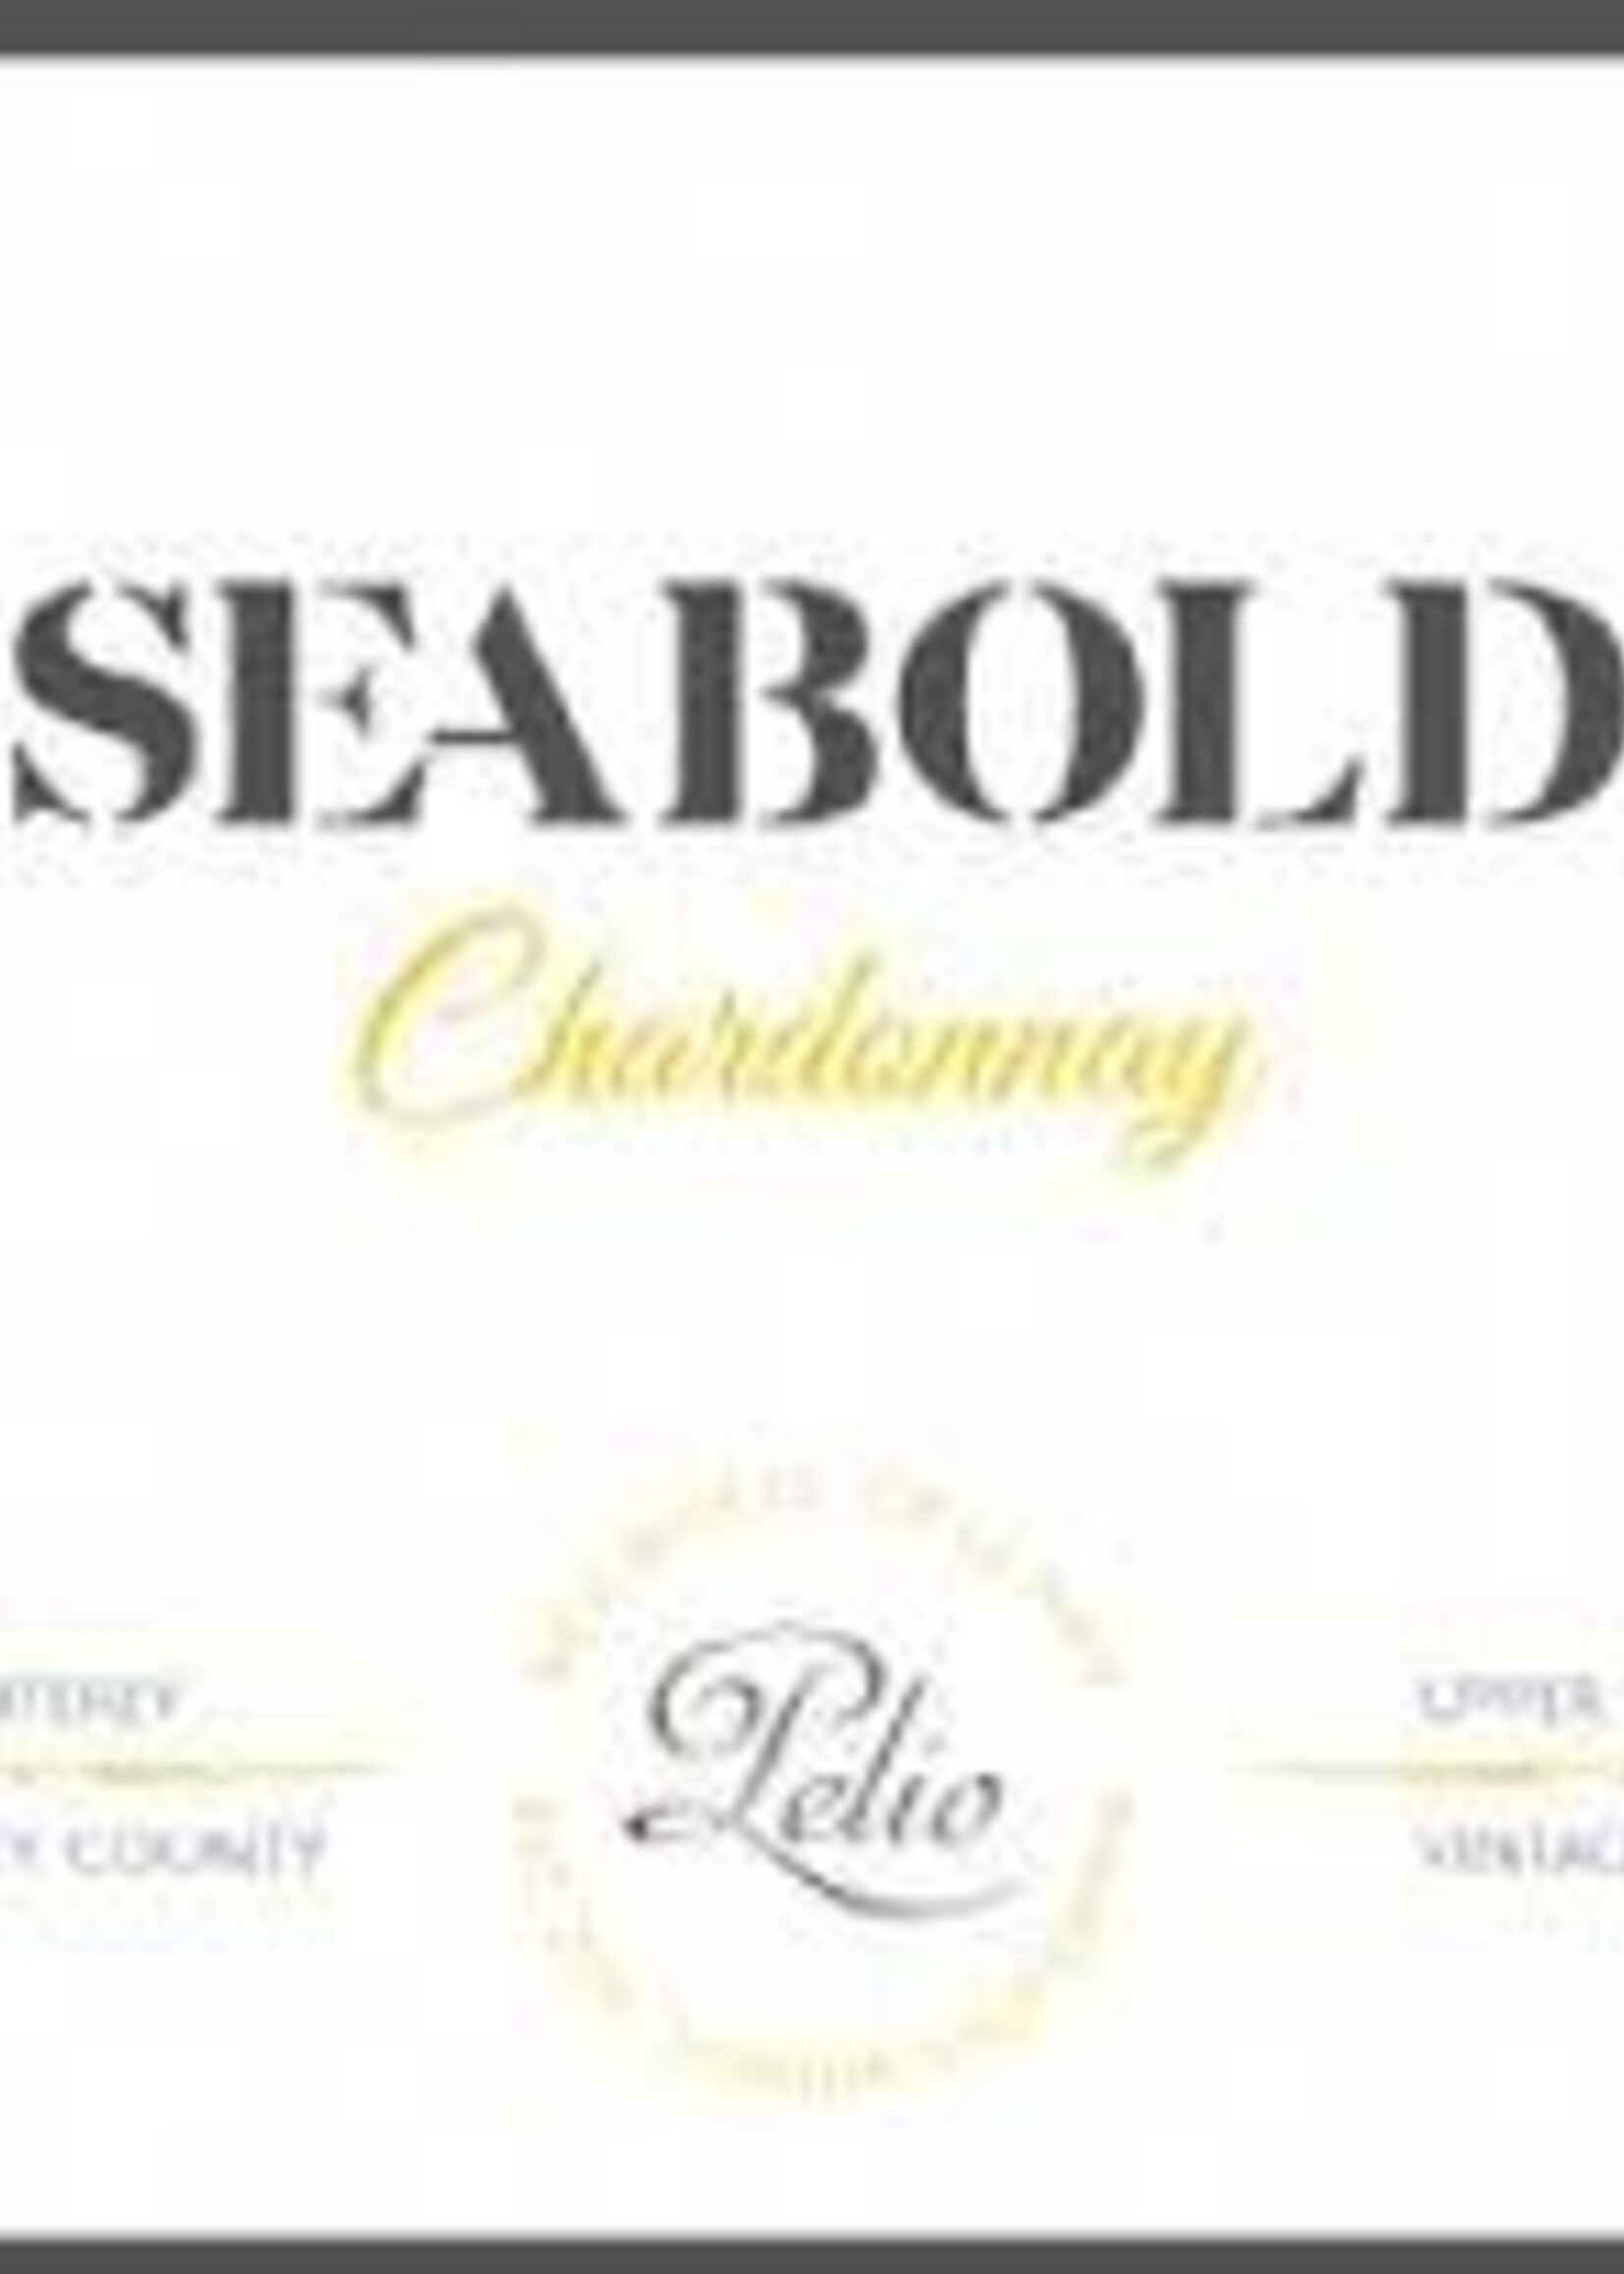 Seabold Cellars Pelio Chardonnay 2018 750ML